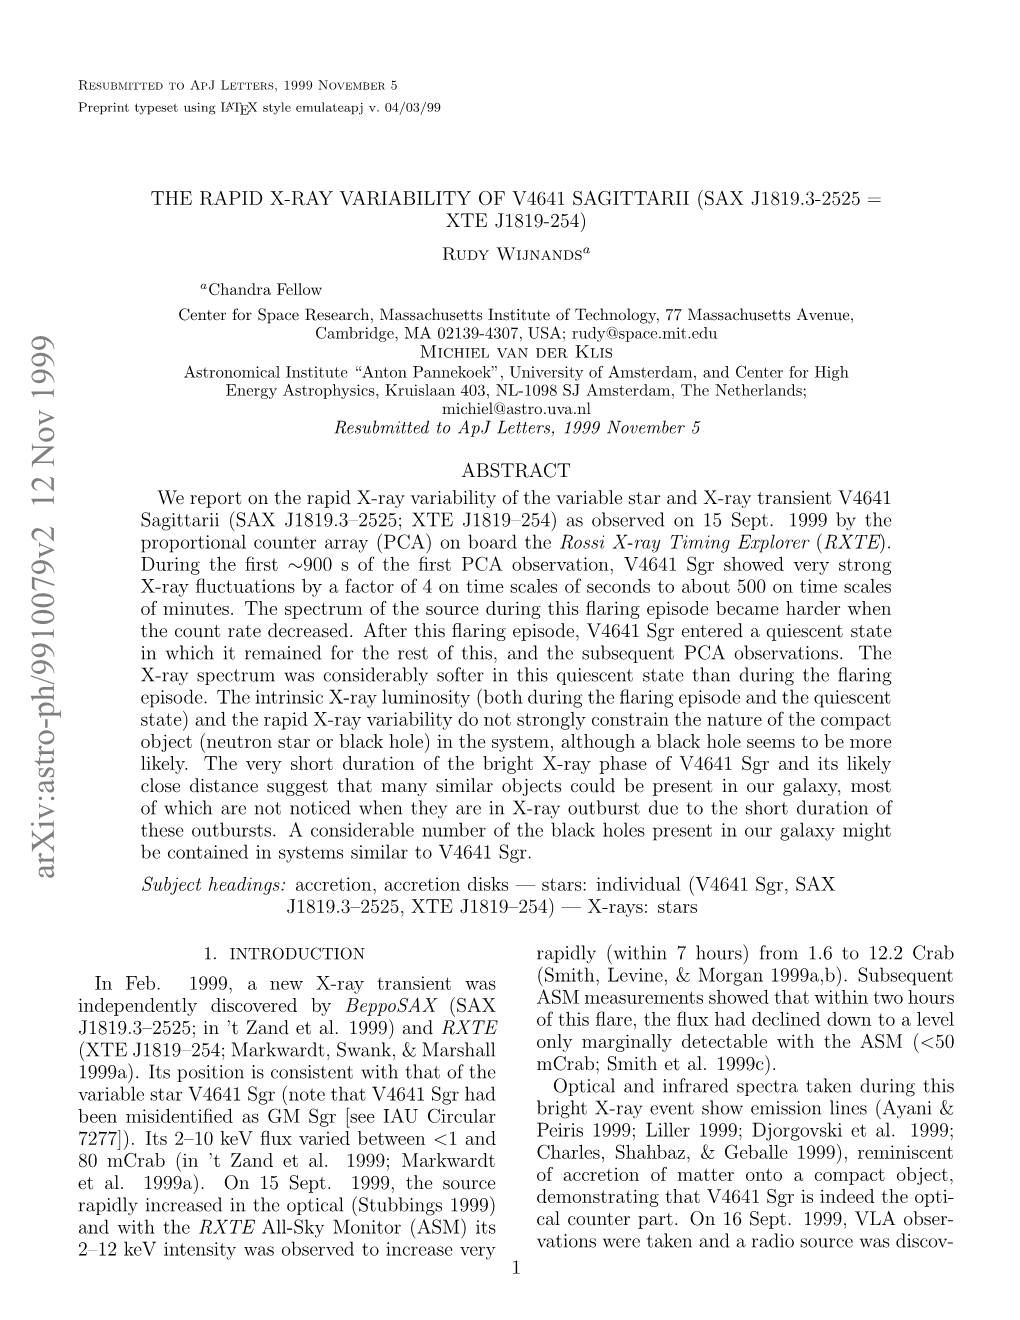 The Rapid X-Ray Variability of V4641 Sagittarii (SAX J1819. 3-2525= XTE J1819-254)